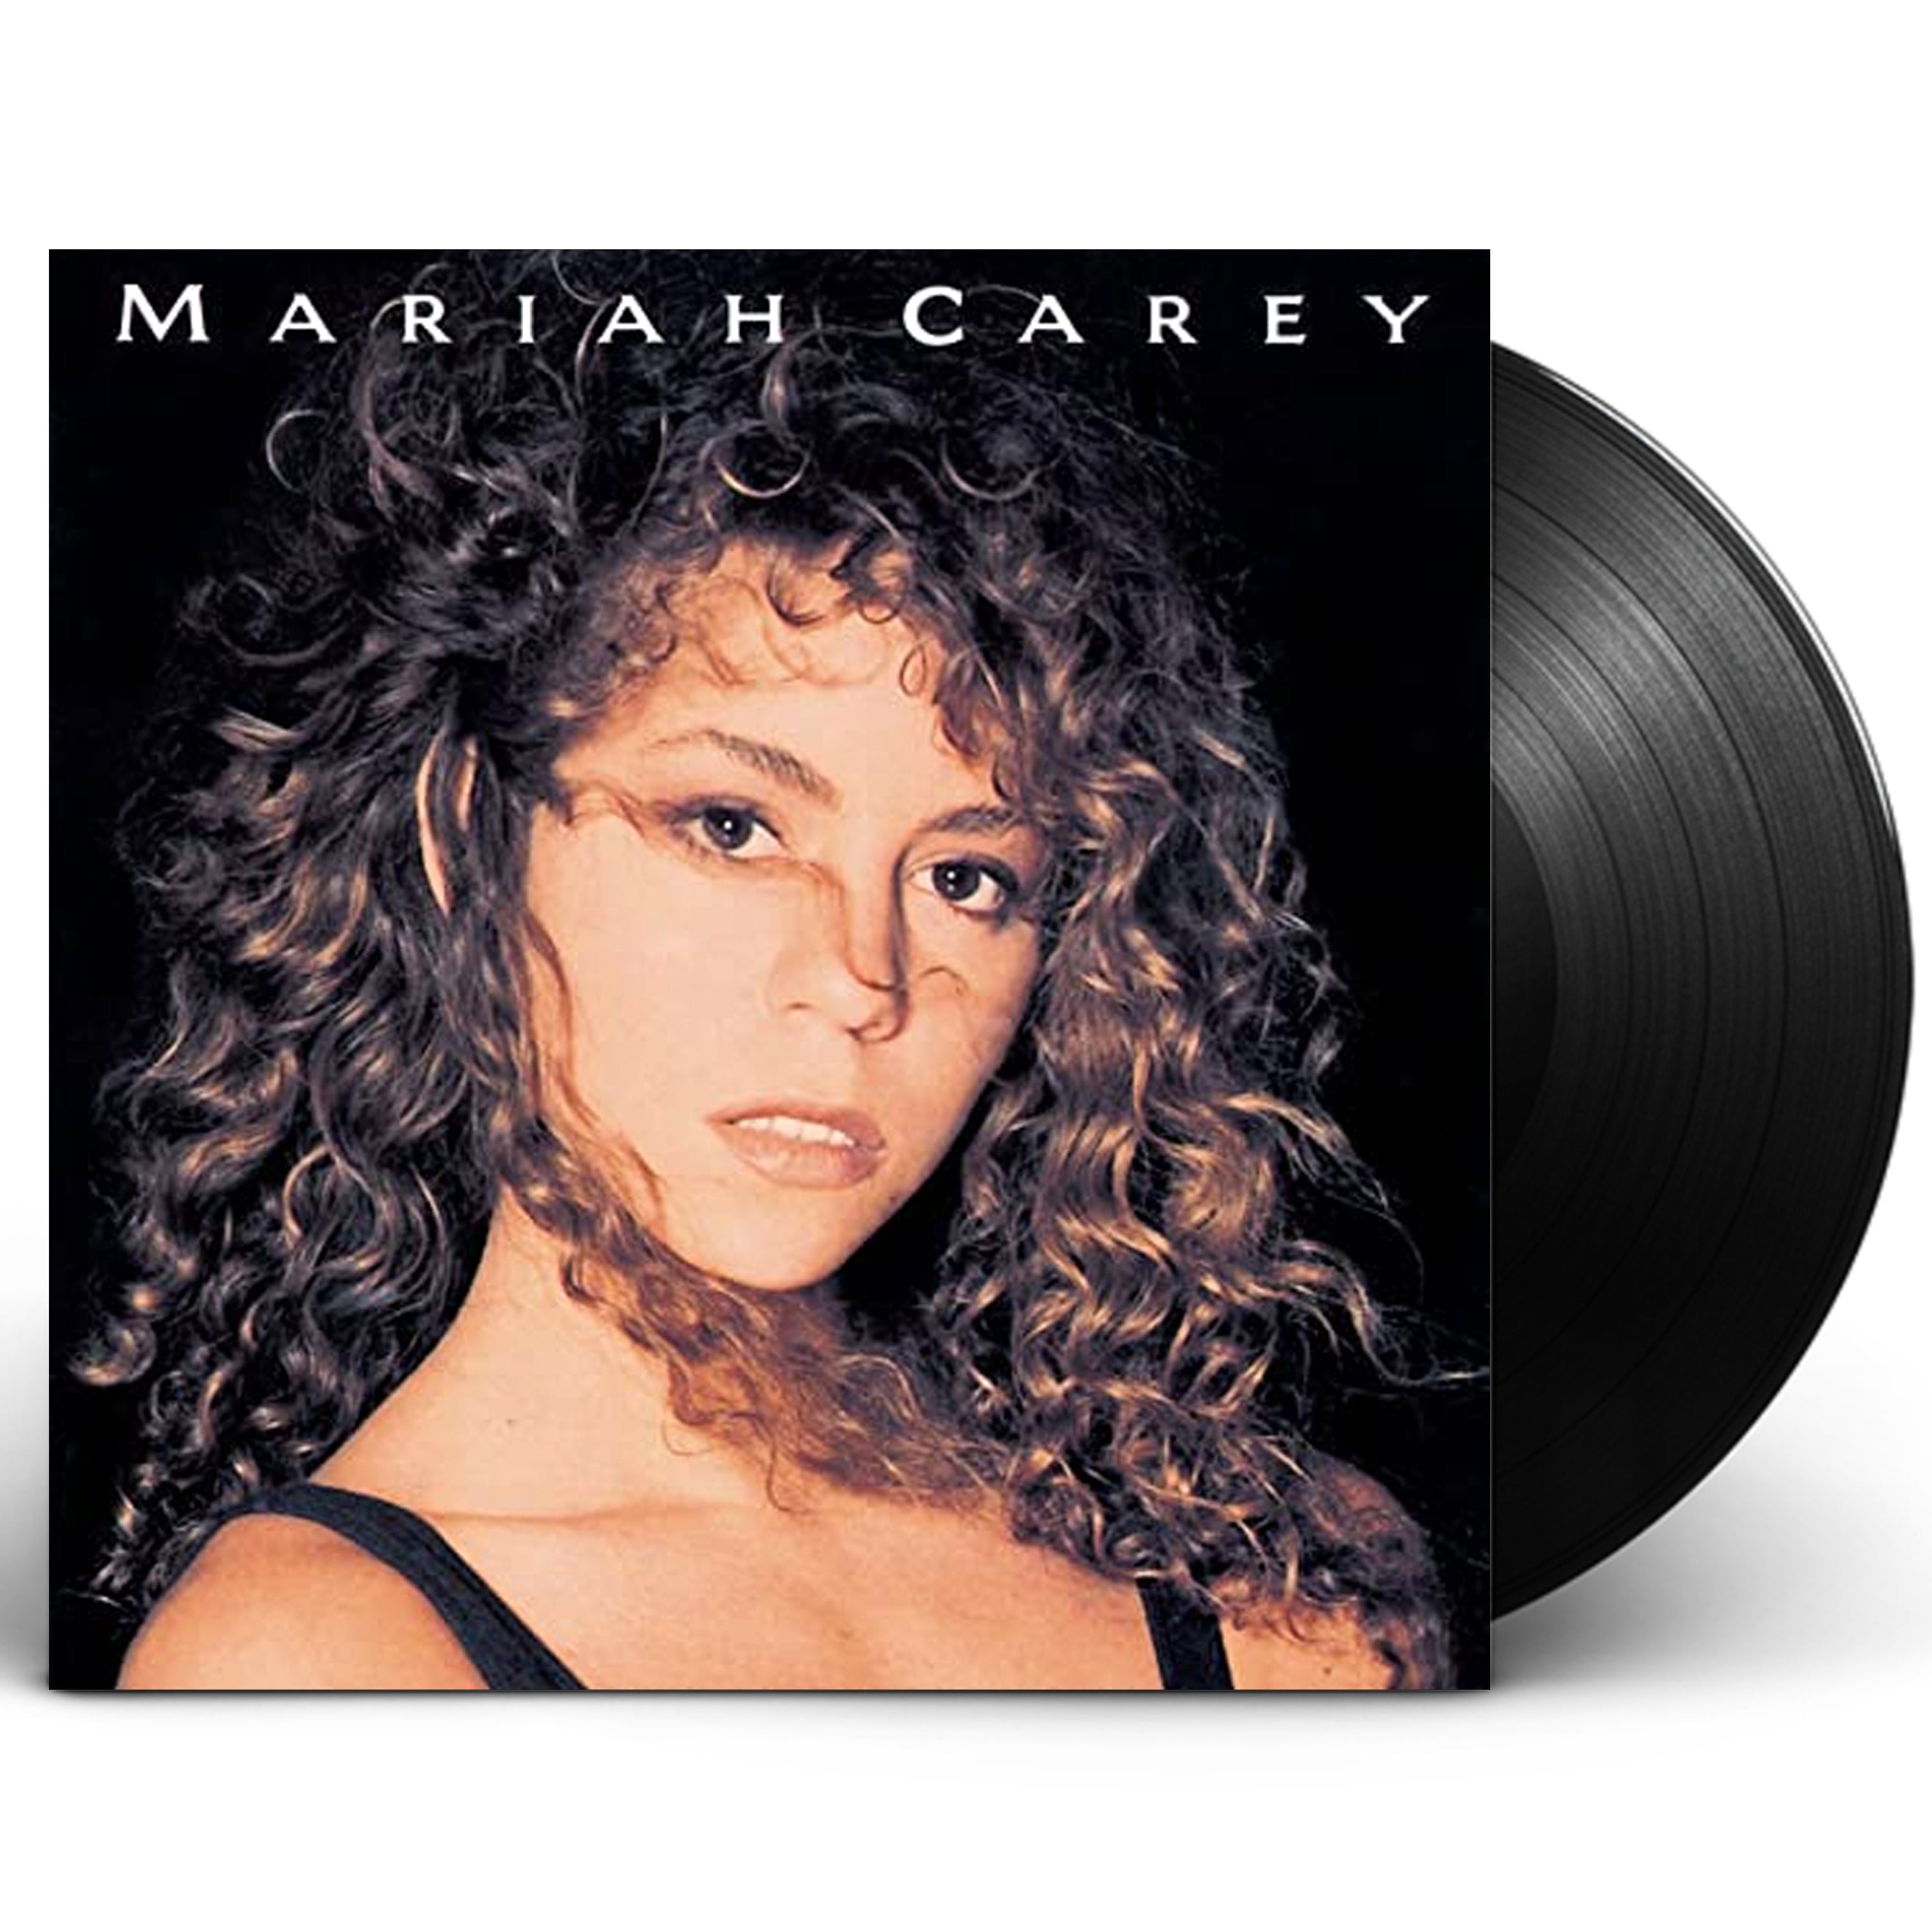 Mariah Carey "Mariah Carey" LP